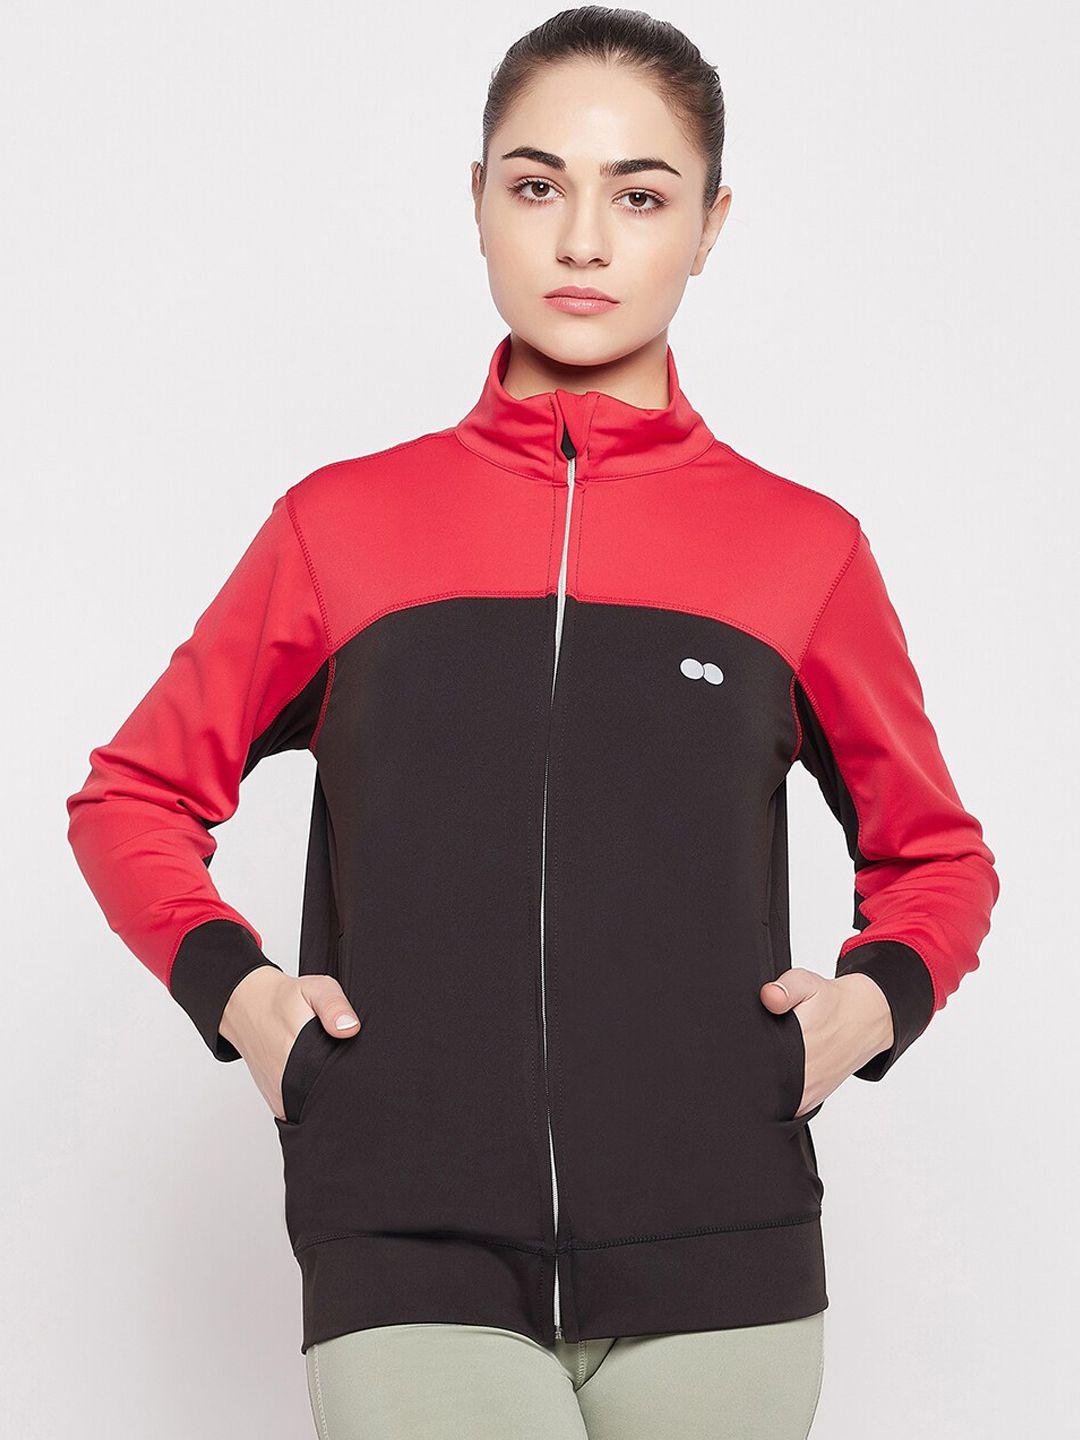 clovia women colourblocked lightweight training or gym sporty jacket